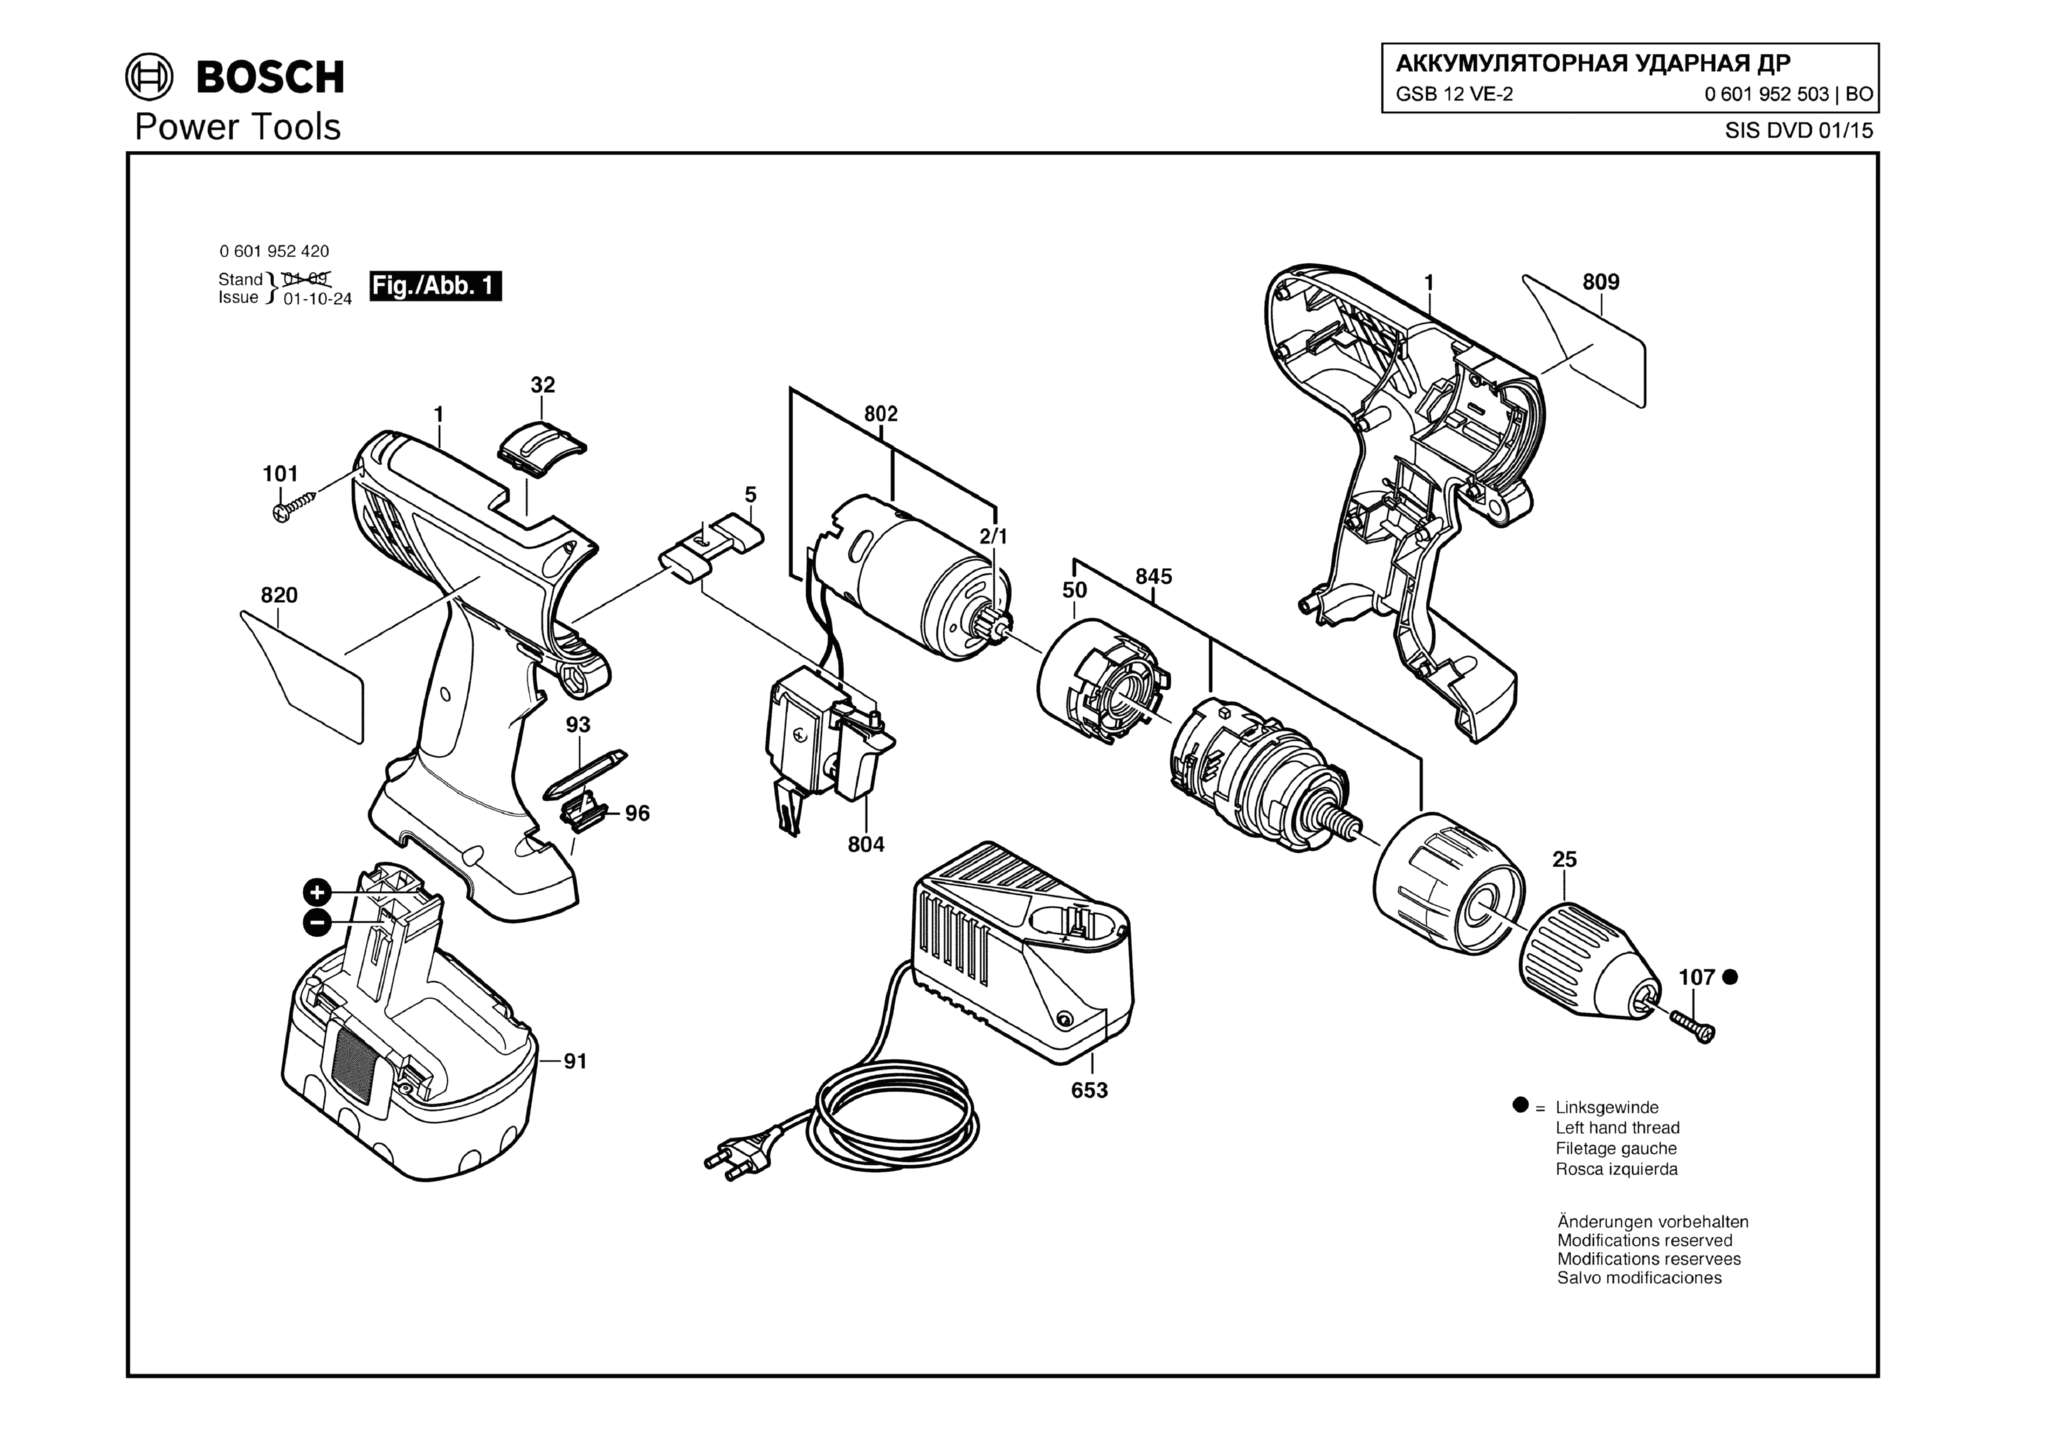 Запчасти, схема и деталировка Bosch GSB 12 VE-2 (ТИП 0601952503)